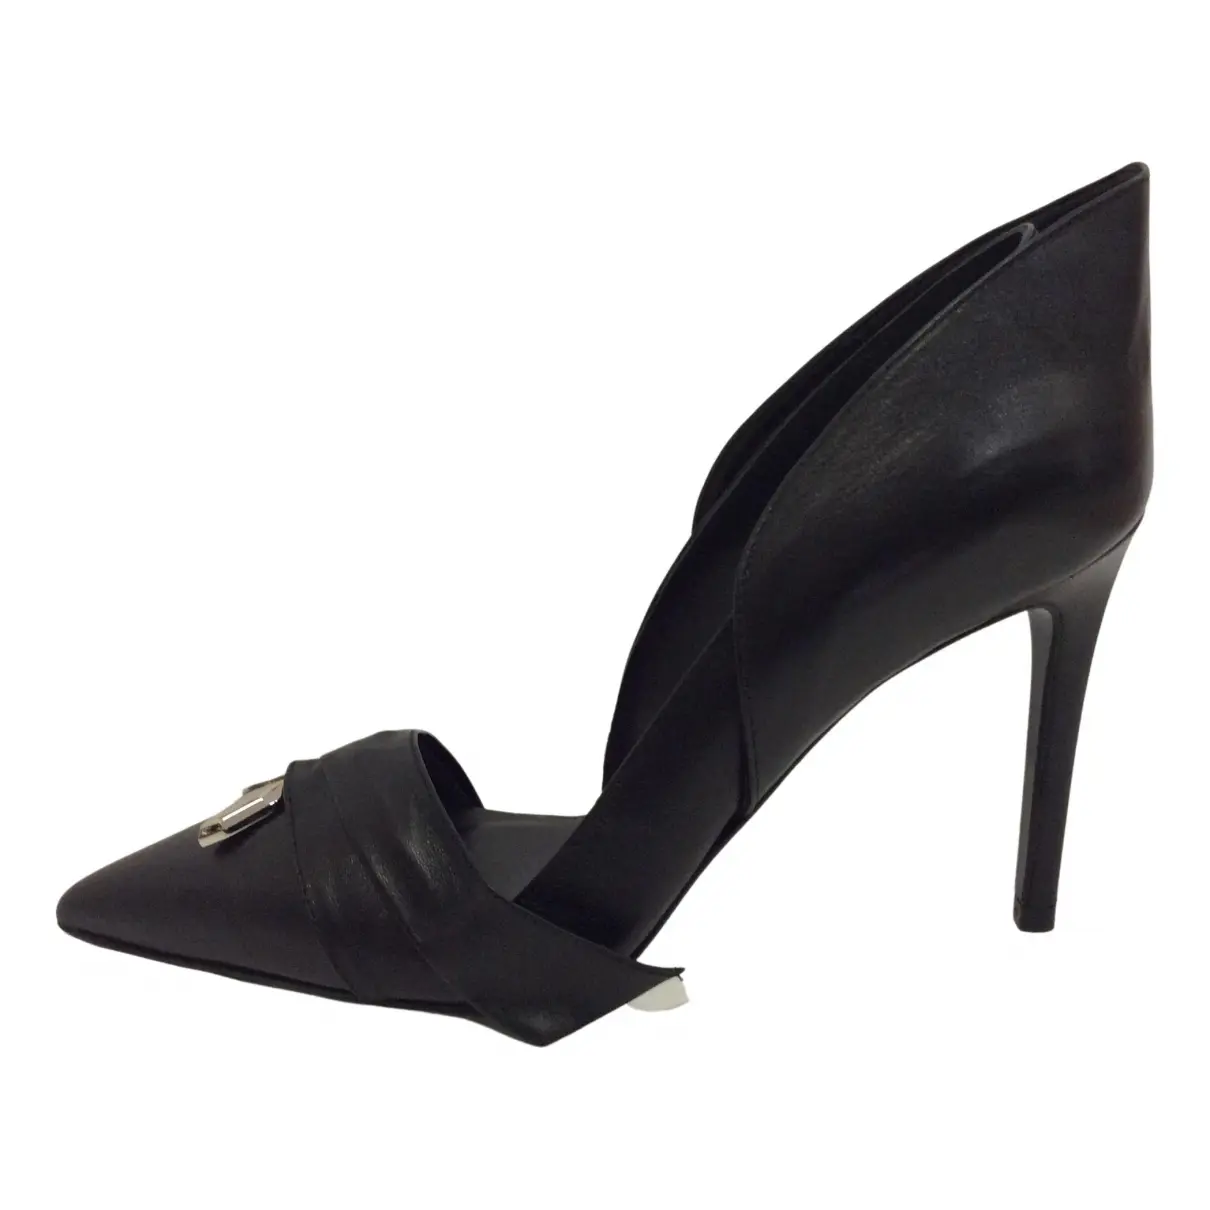 Leather heels Patrizia Pepe